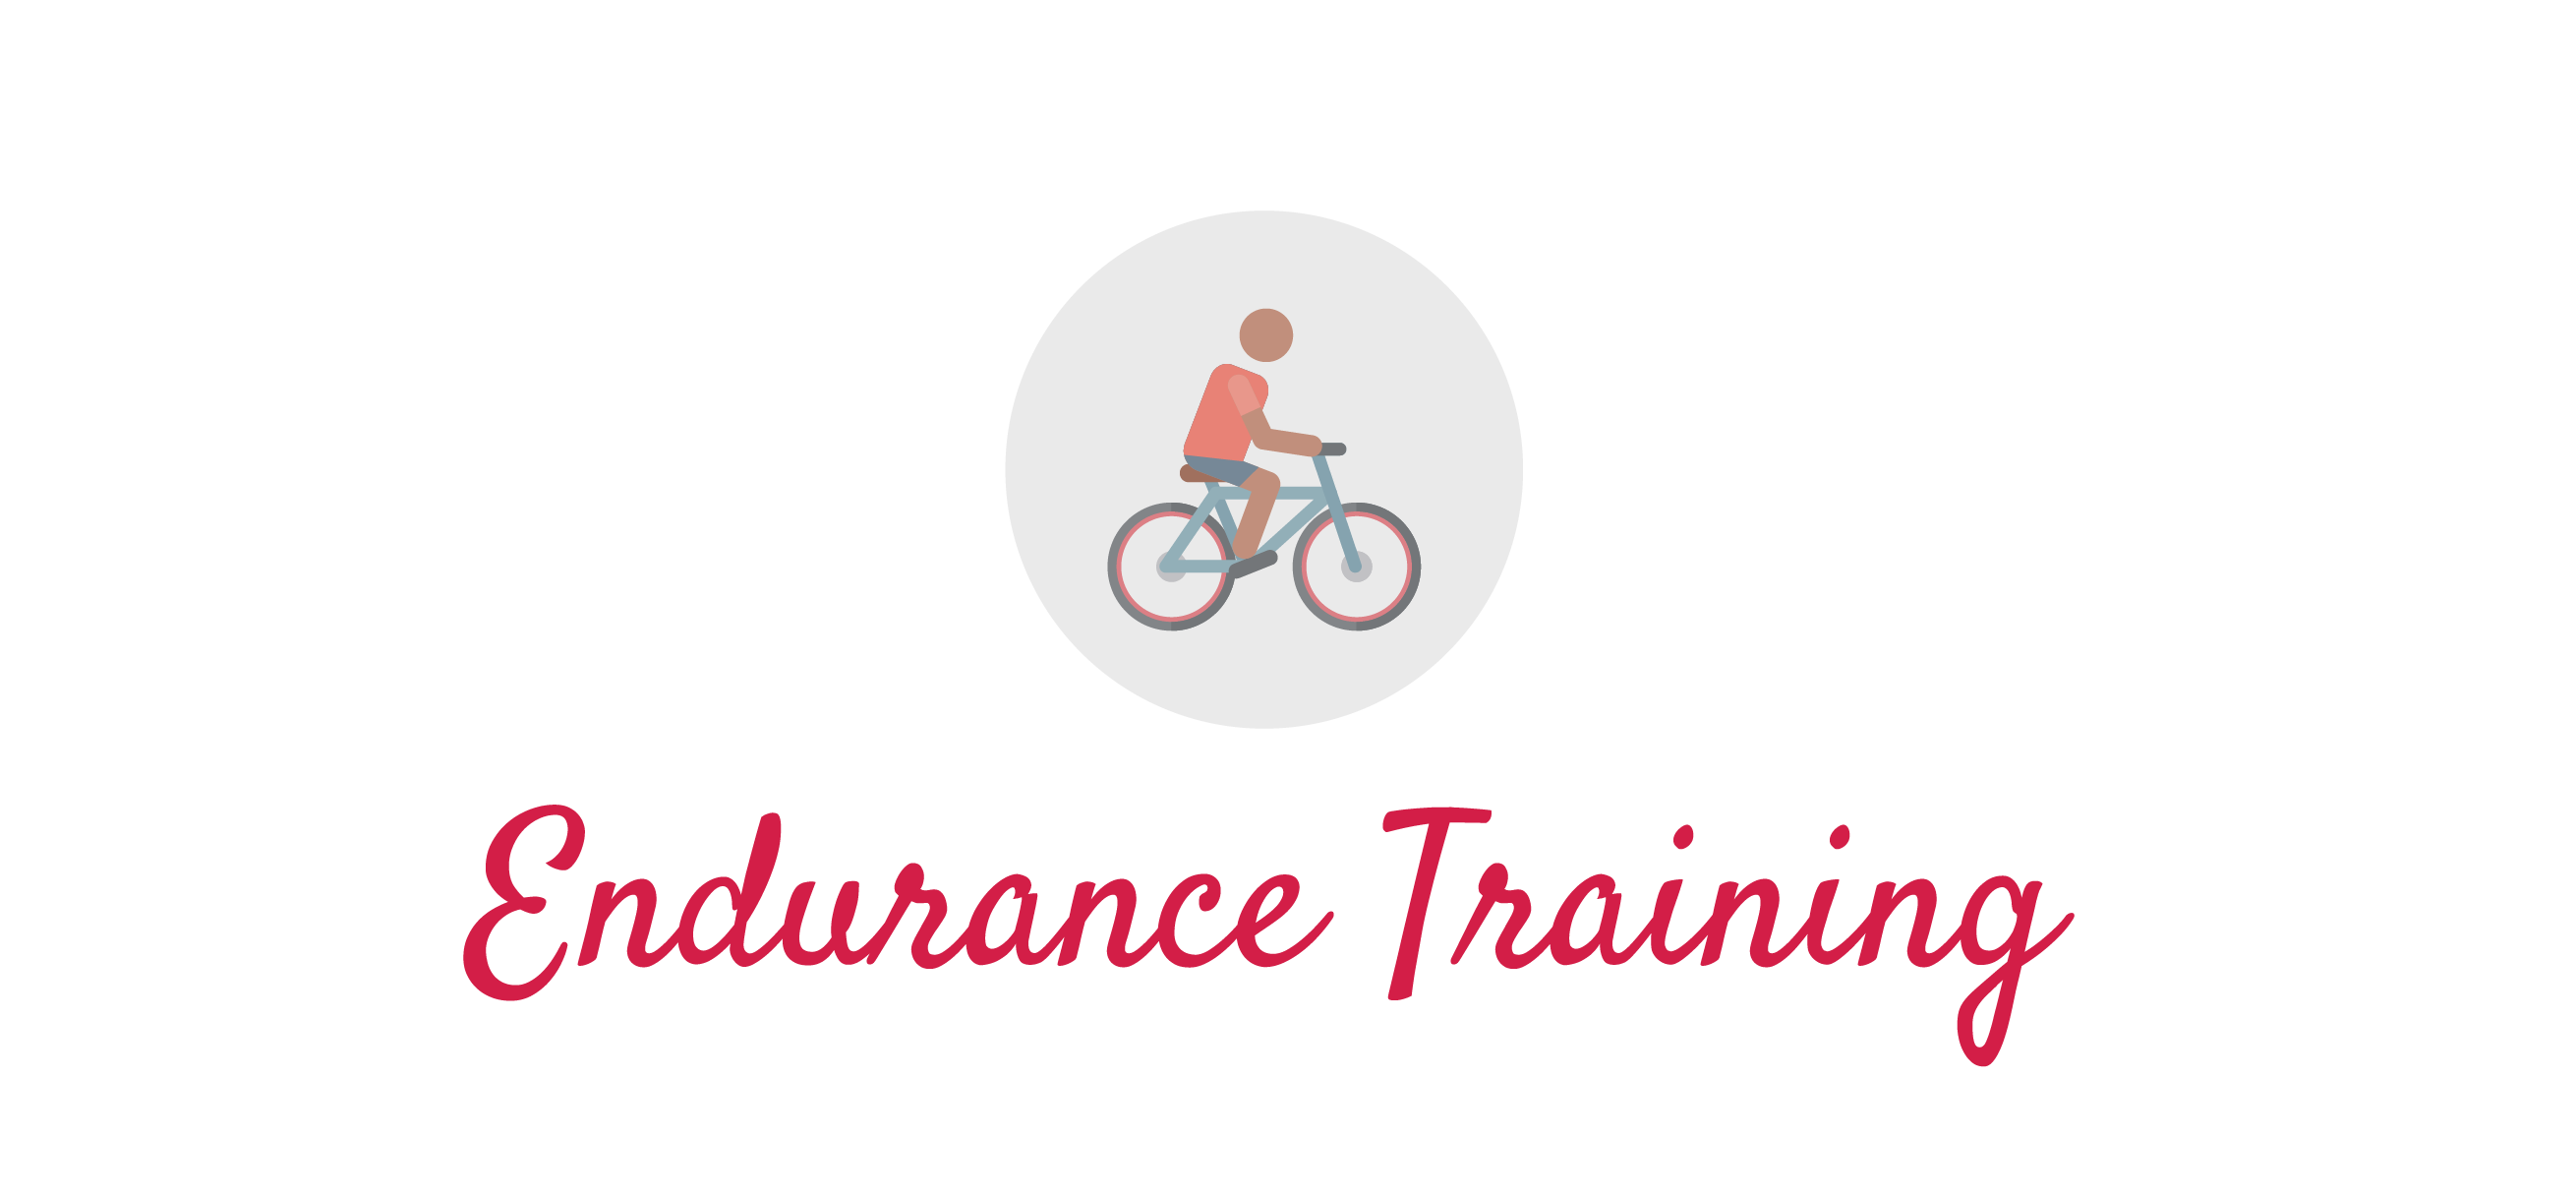 Endurance training icon